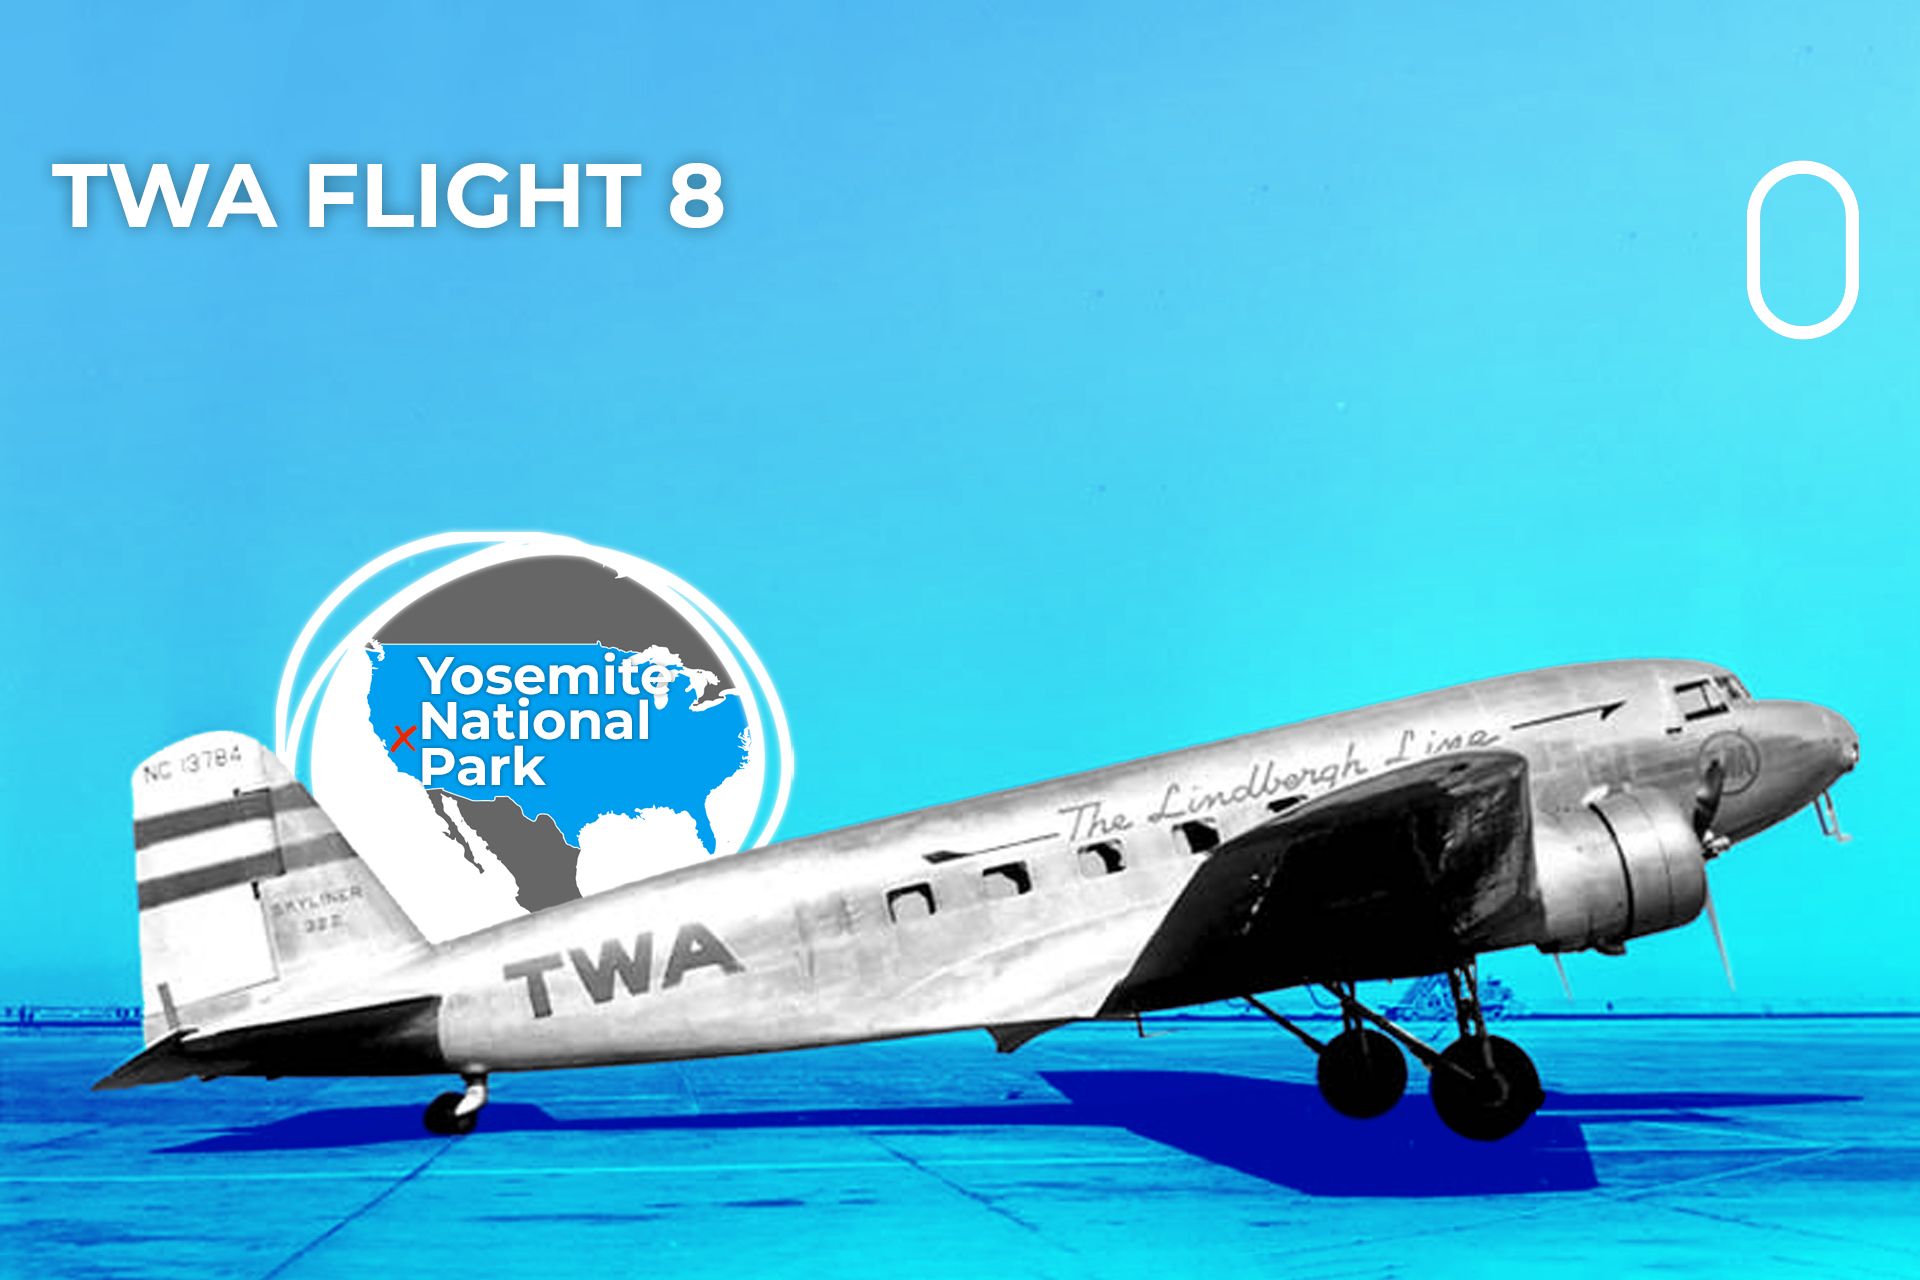 Missing For Three Months: The Crash Of TWA Flight 8